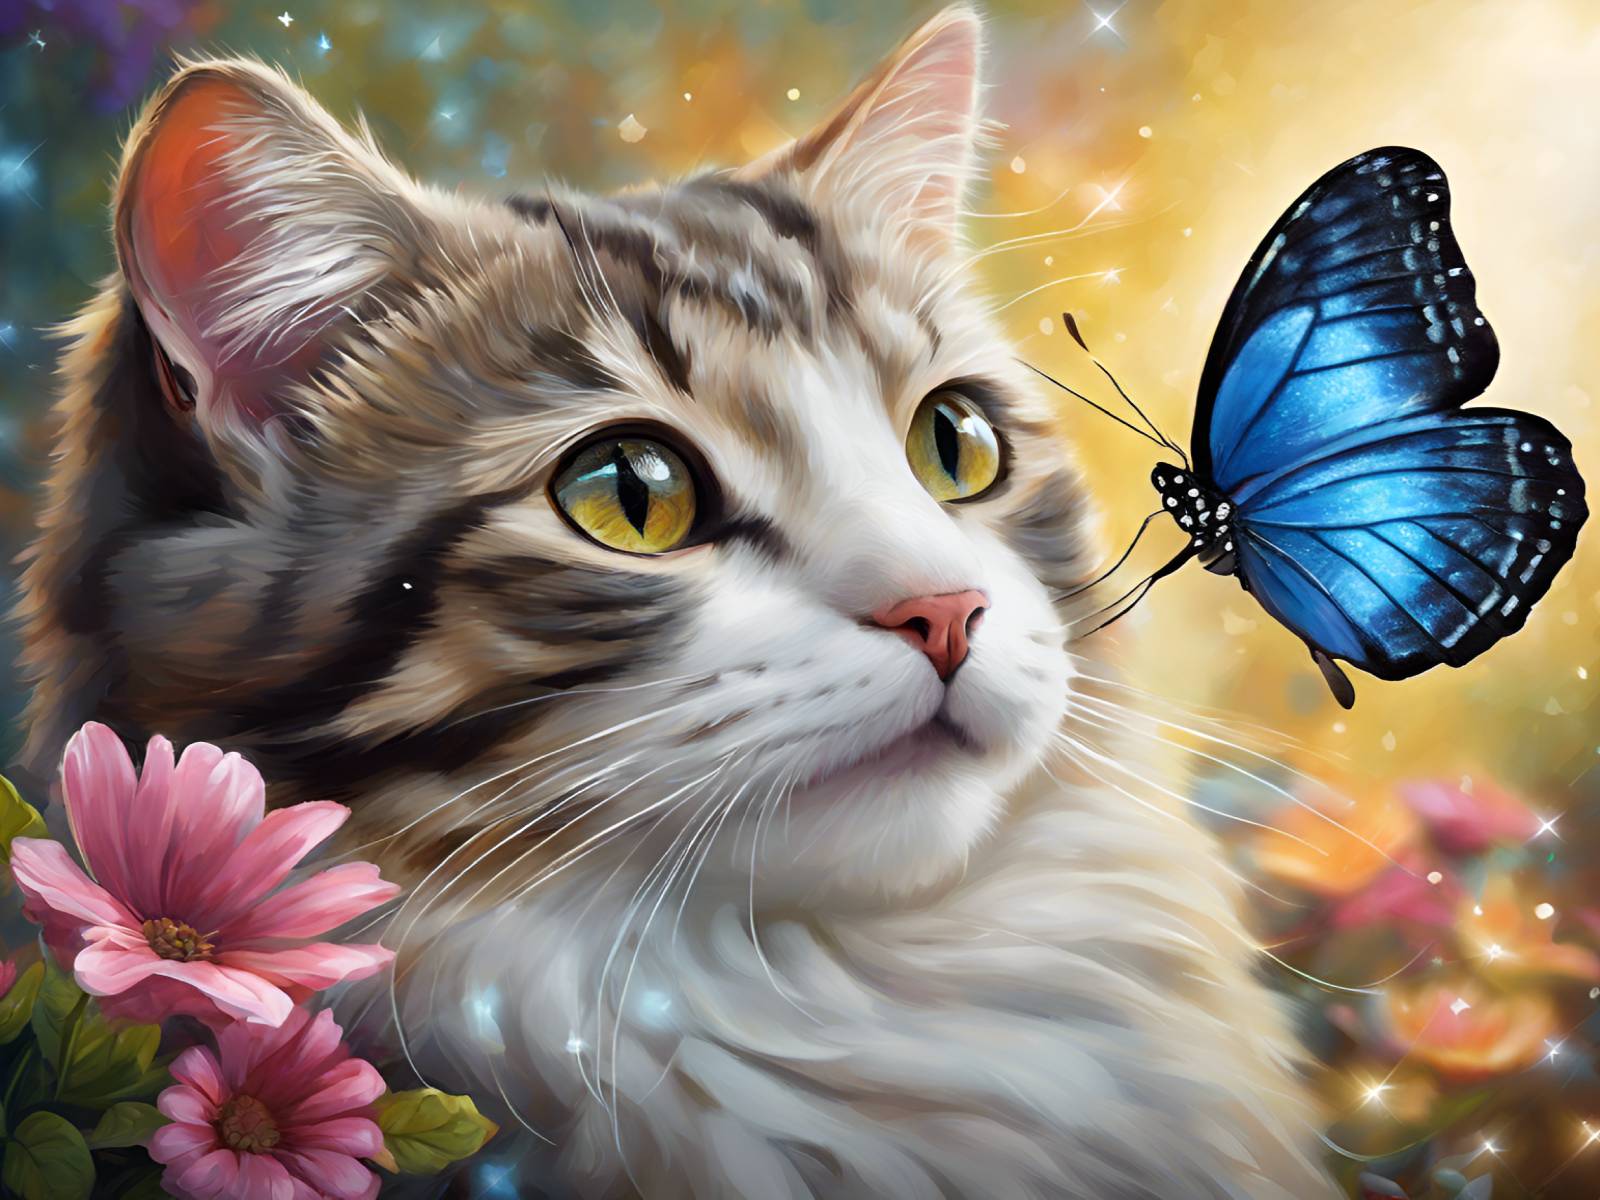 diamonds-wizard-diamond-painting-kits-Animals-Cat-Fluttering-Friendship-original.jpg